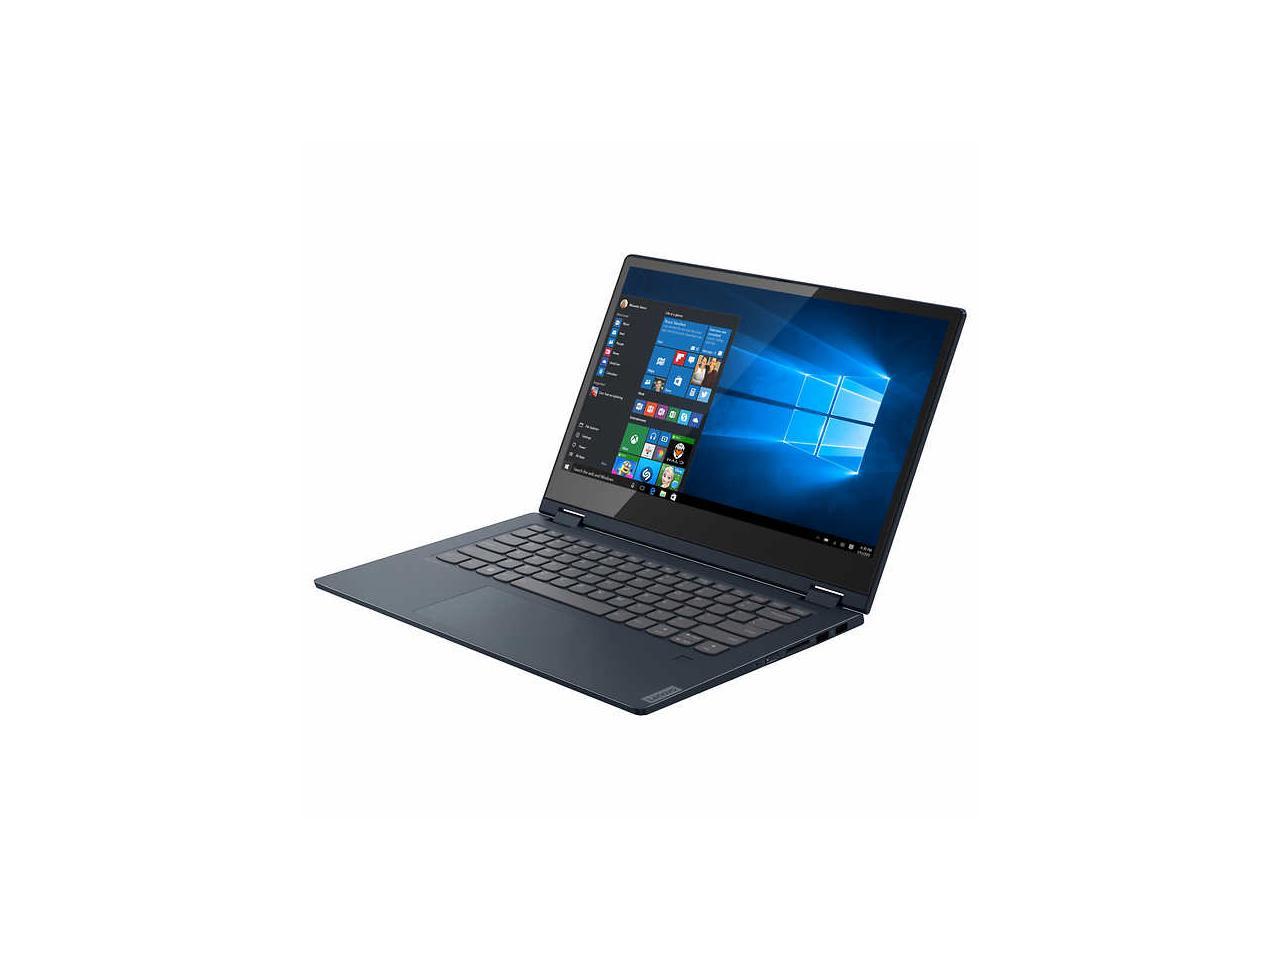 Lenovo Flex 14 2-in-1 Touchscreen Laptop - Intel Core i5 - 1080p - Blue 81SQ000KUS Notebook PC